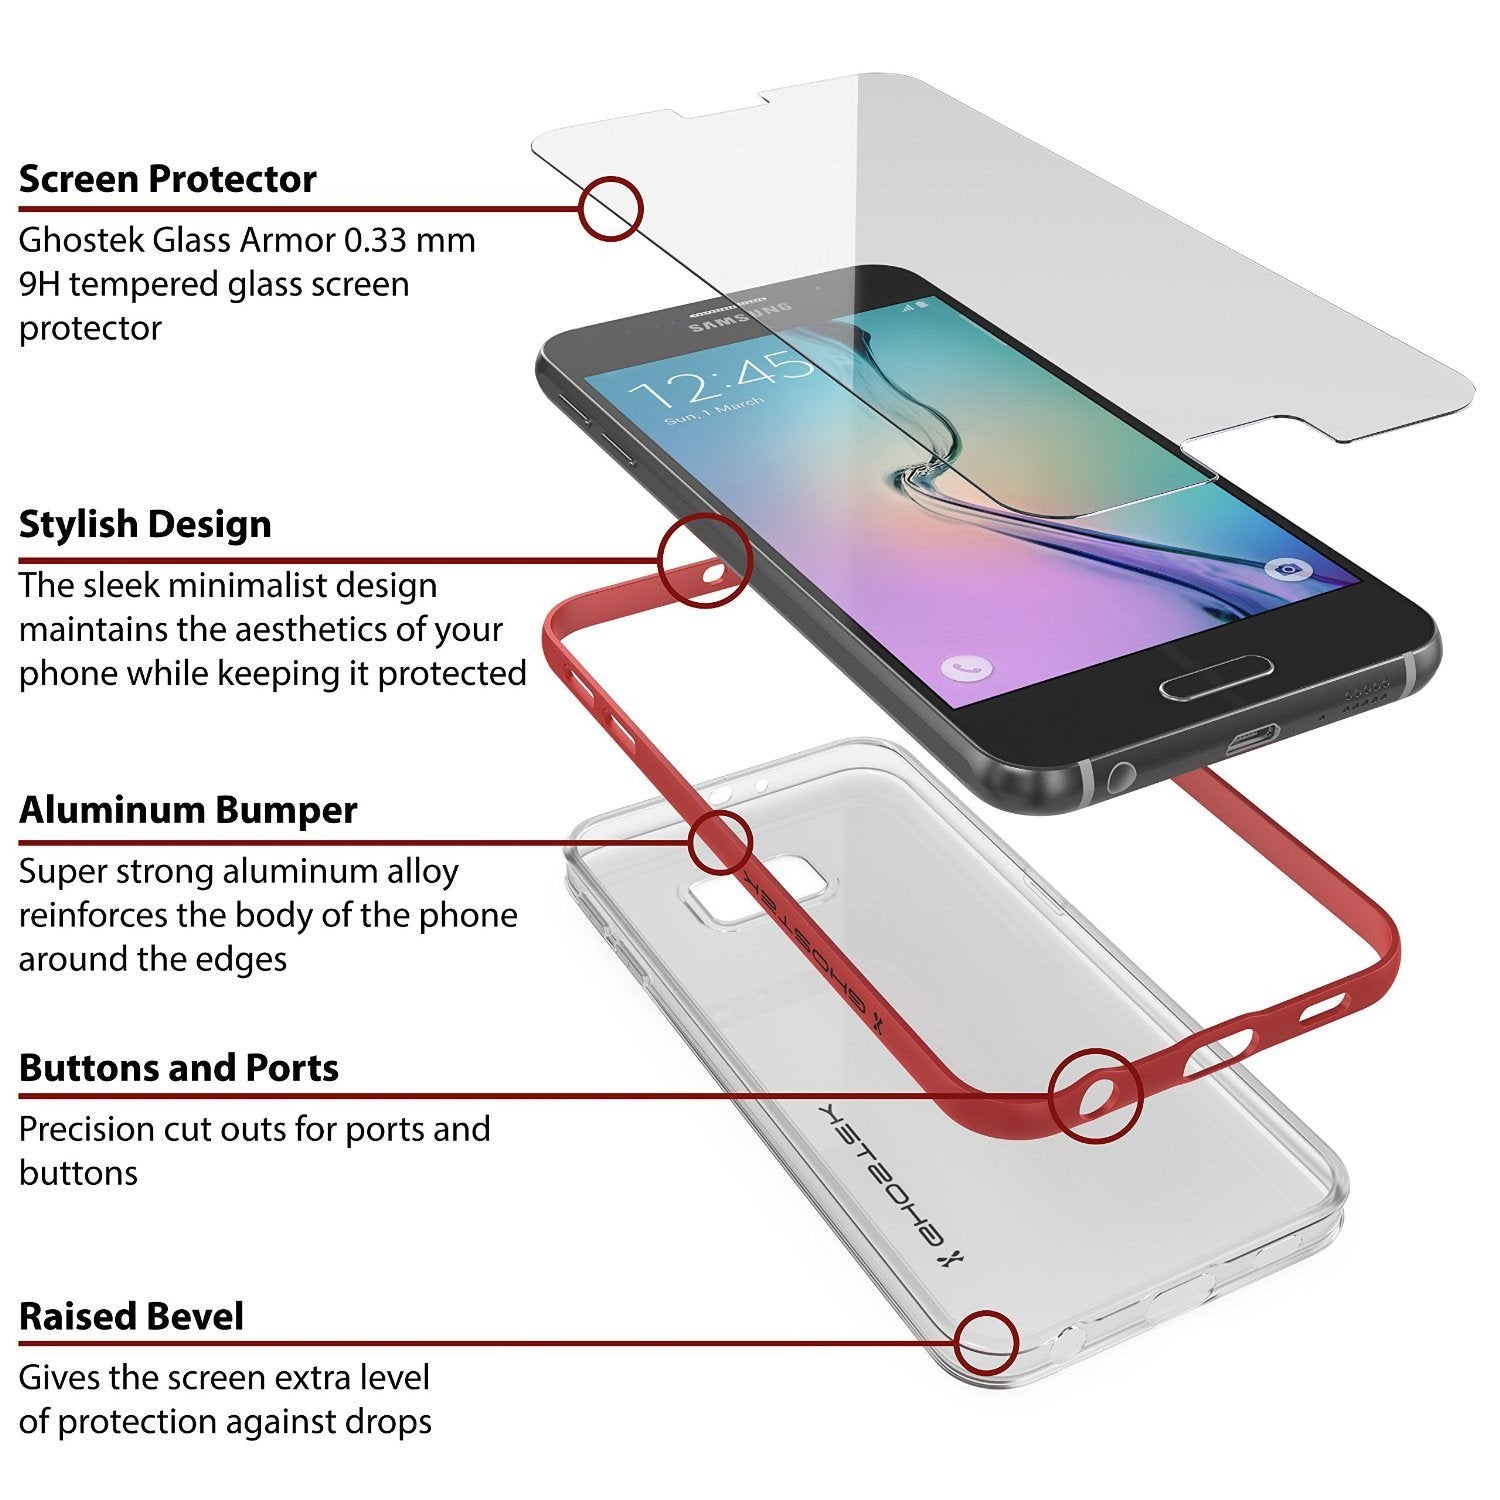 Galaxy S6 Case, Ghostek Cloak Series Red  Slim Premium Protective Hybrid Impact Glass Armor